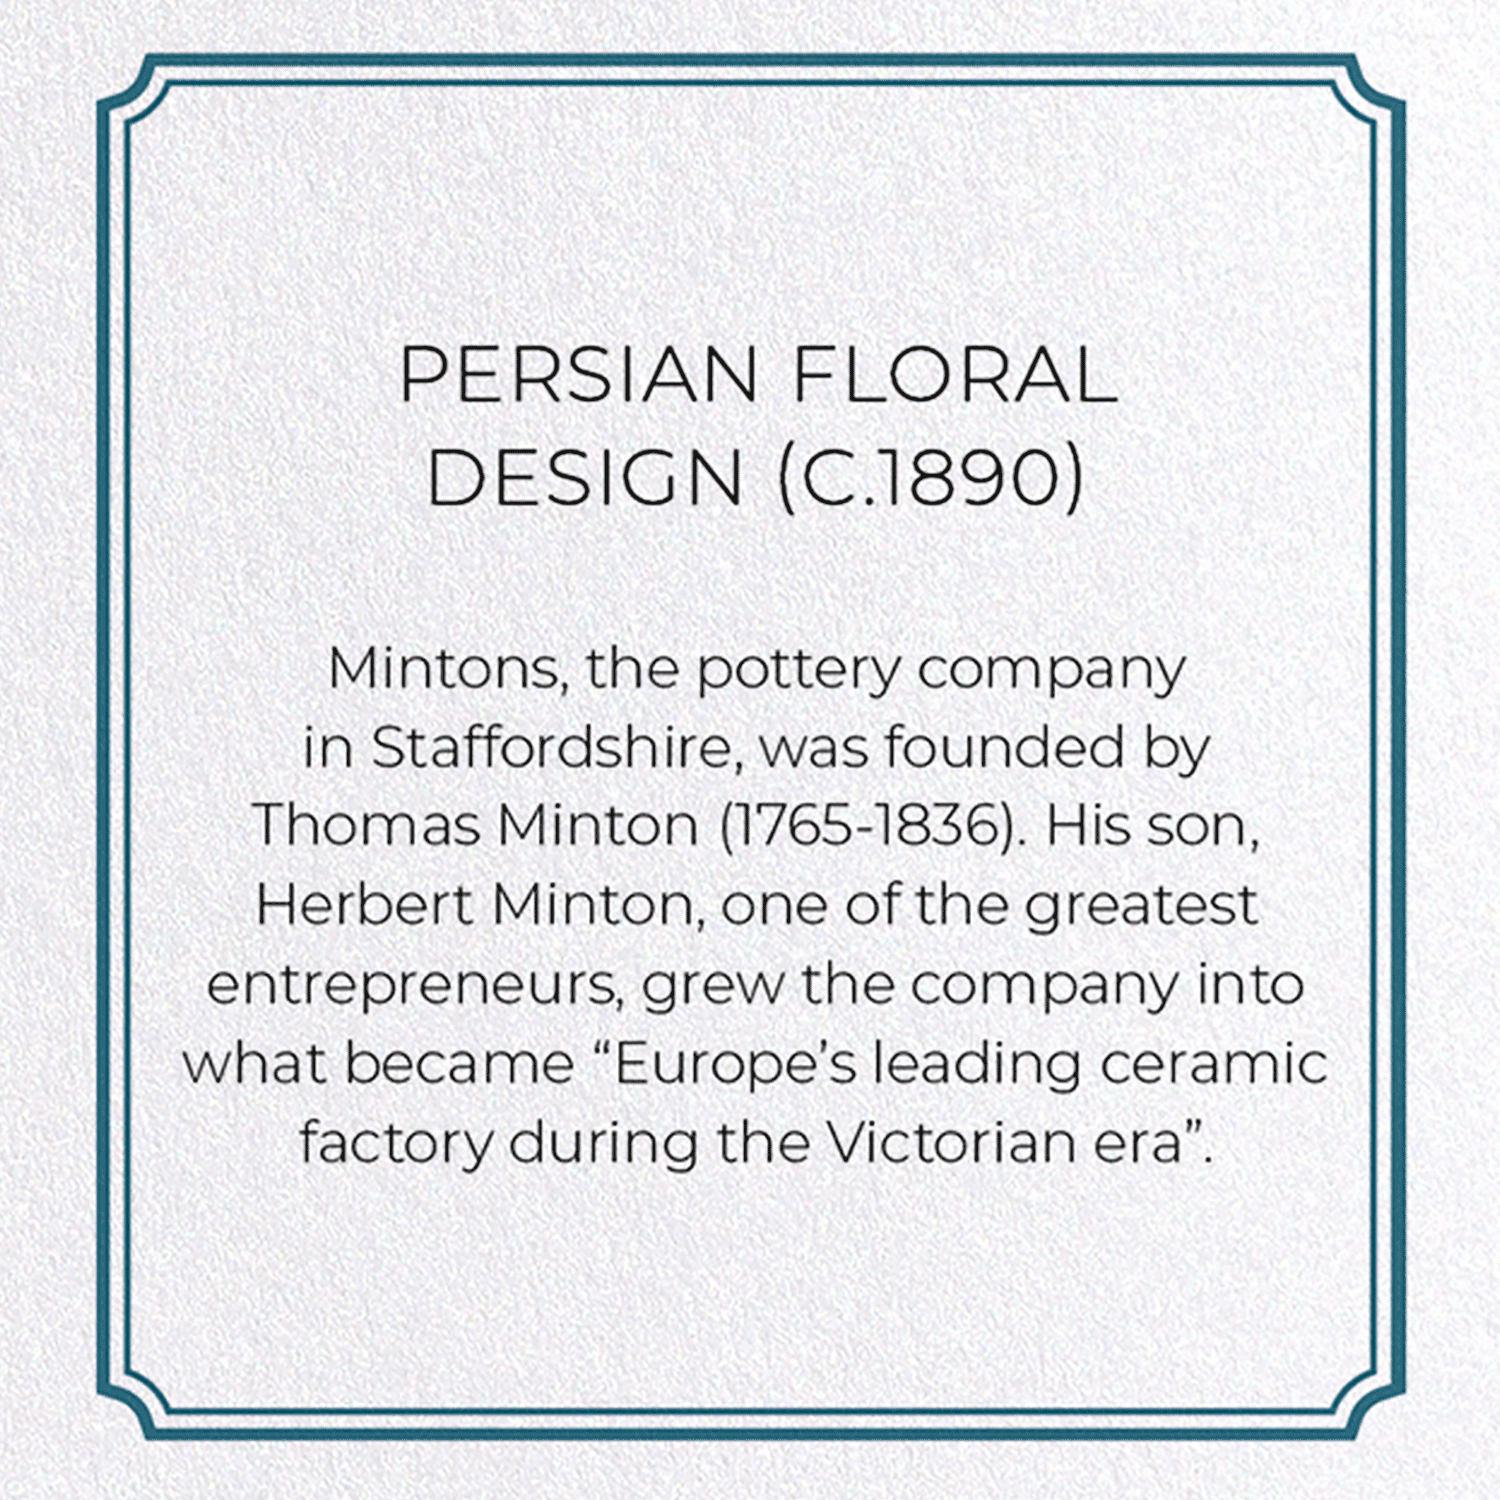 PERSIAN FLORAL DESIGN (C.1890): Pattern Greeting Card